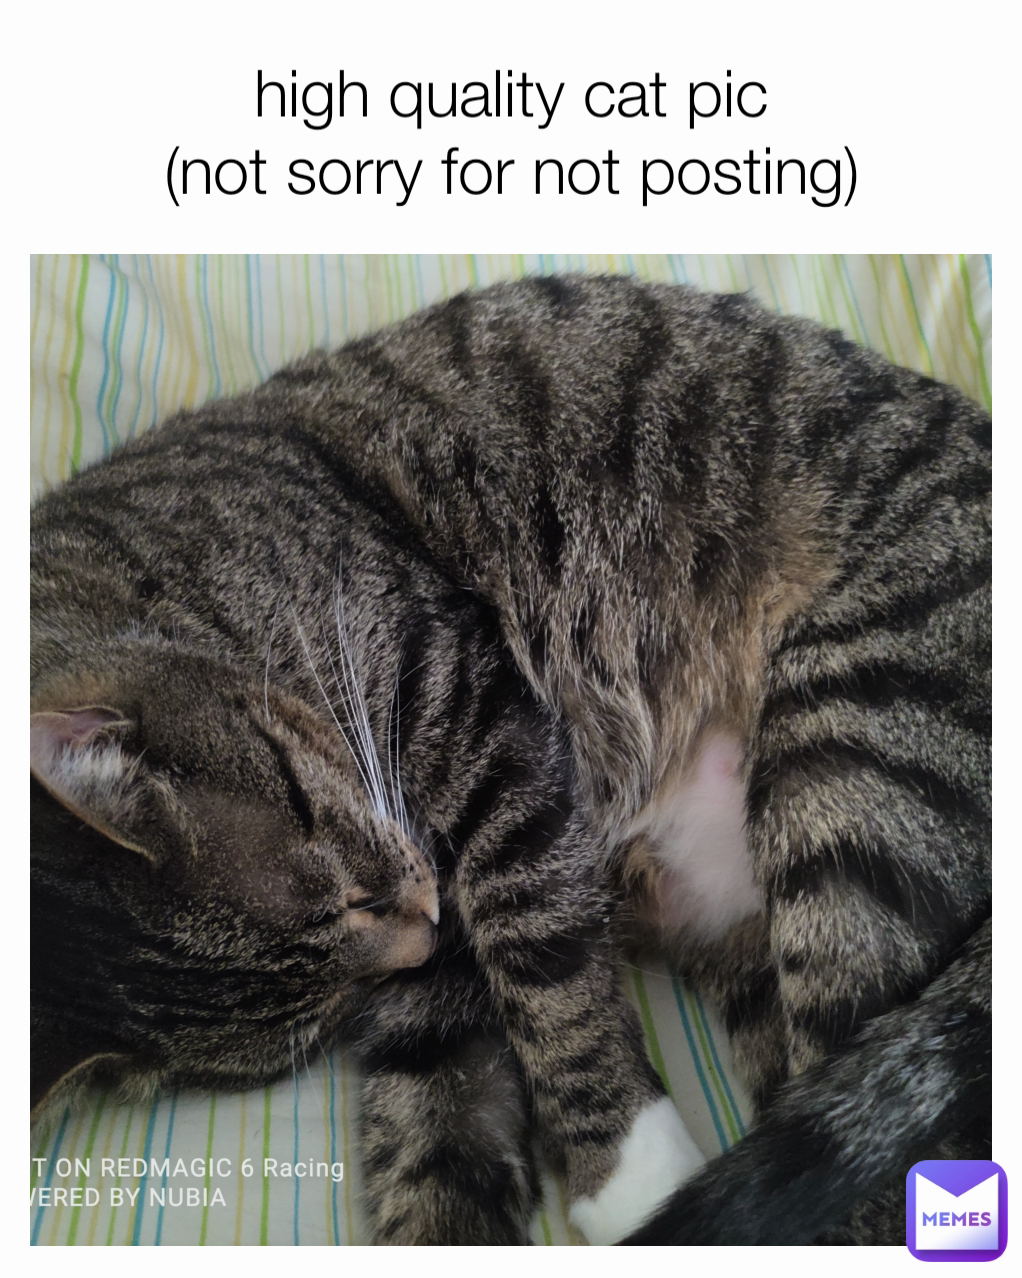 sorry cat